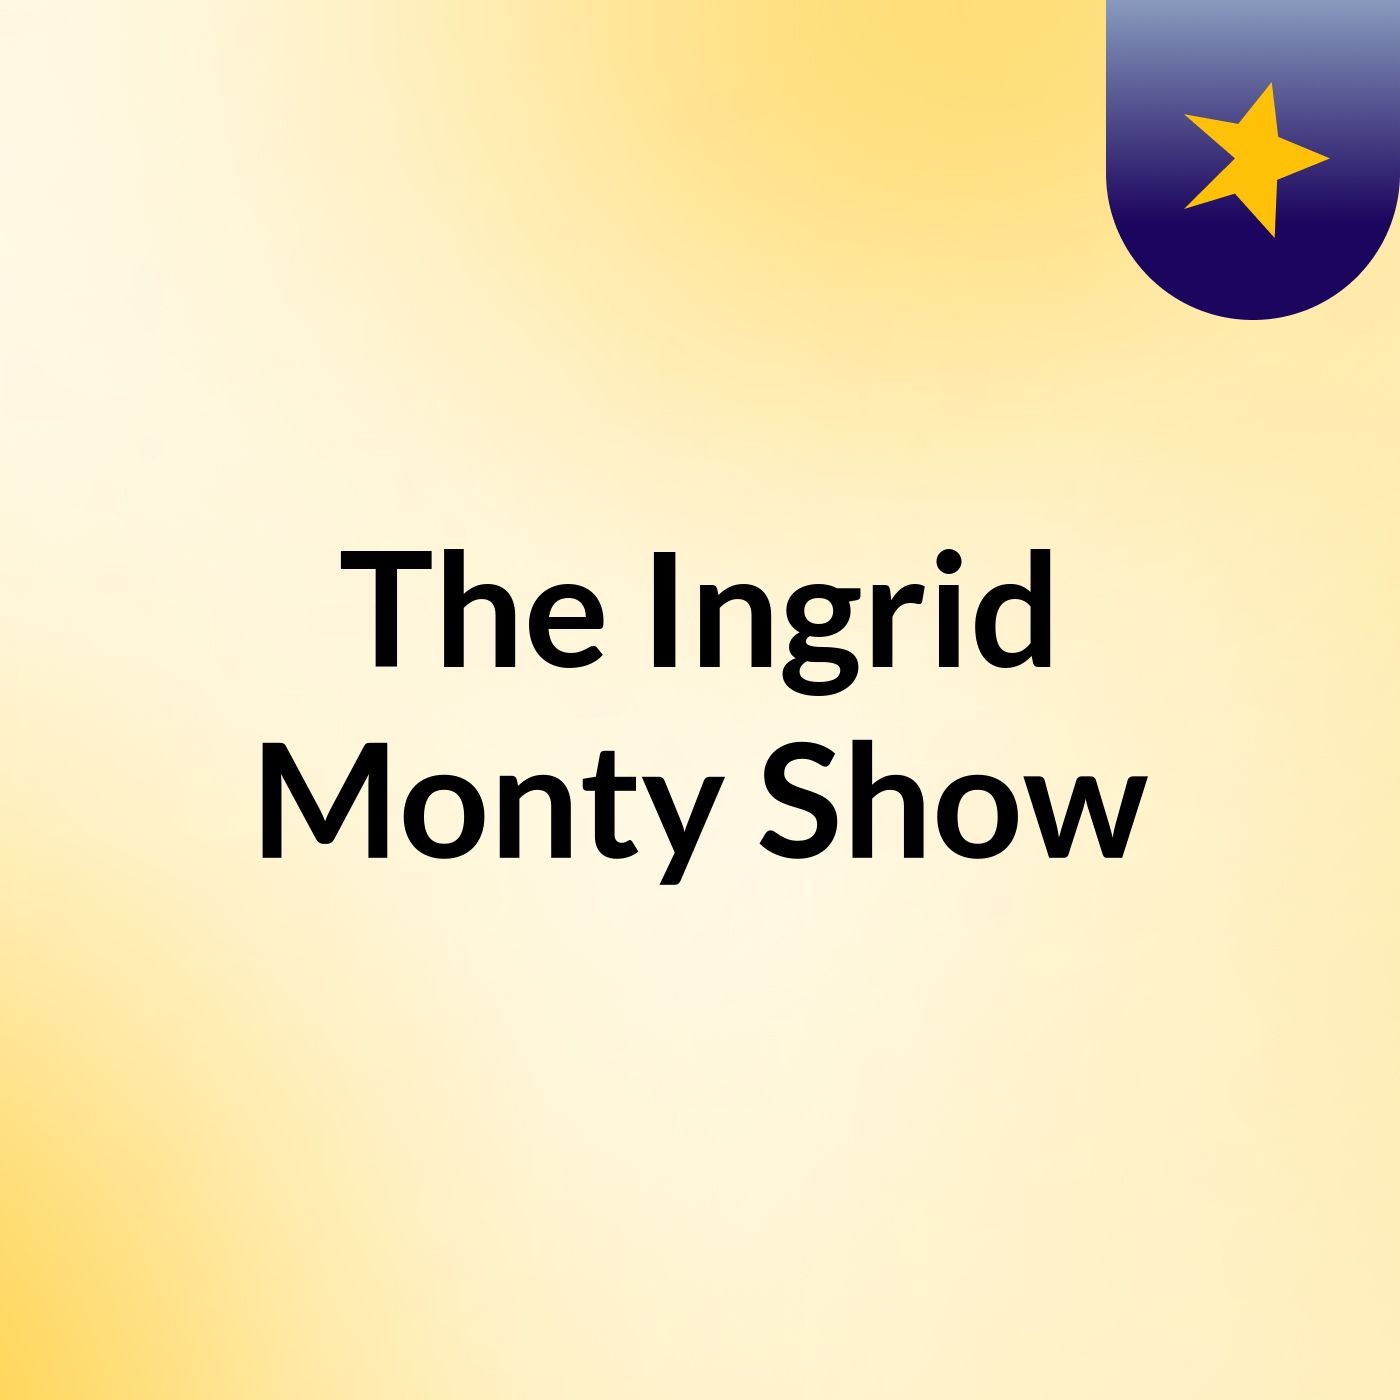 The Ingrid Monty Show